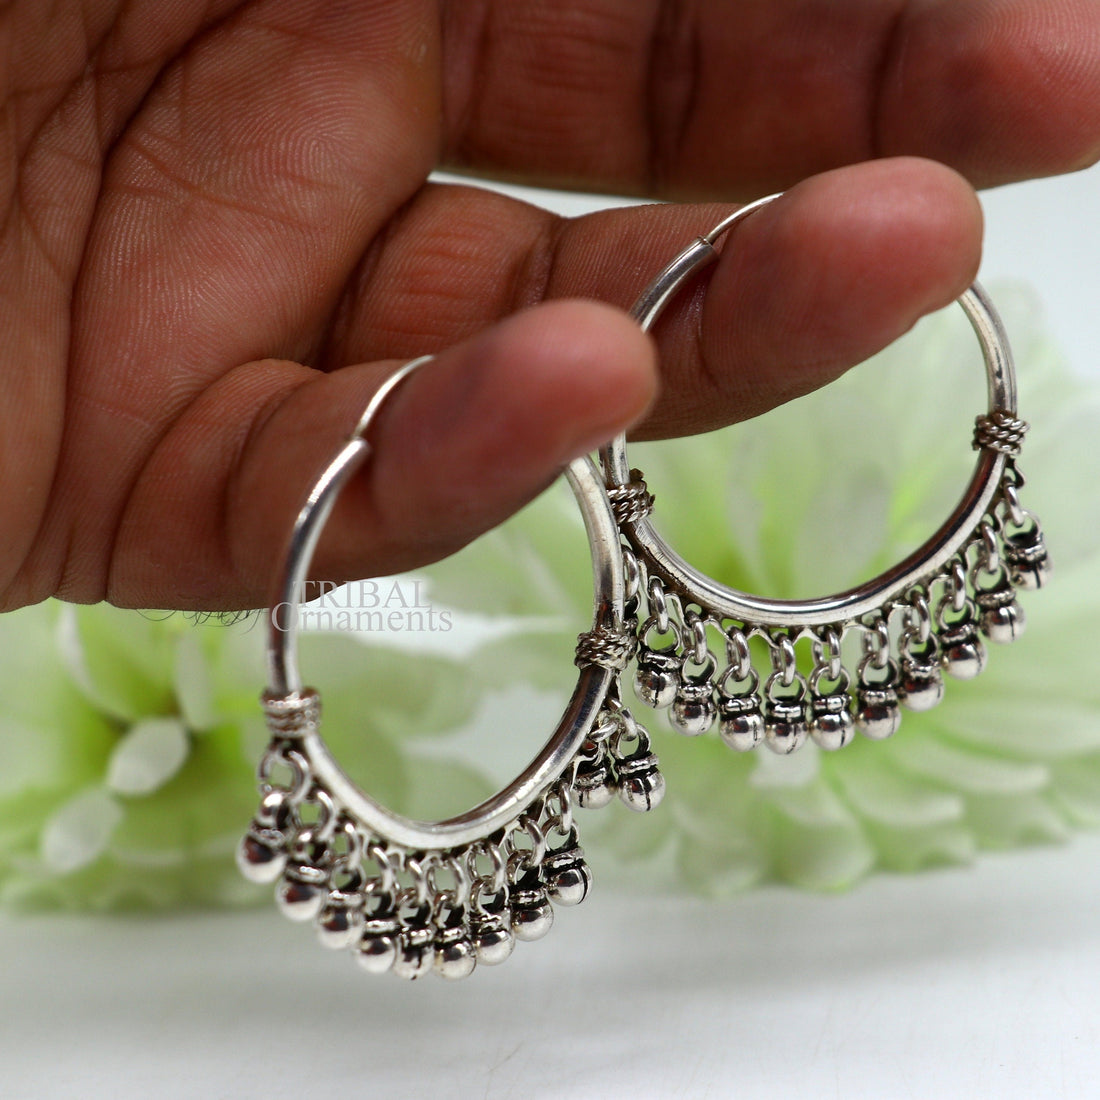 925 sterling silver handmade hoop earring, fabulous Bali, hanging bells, hook, hoop gifting gorgeous tribal customized jewelry s368 - TRIBAL ORNAMENTS